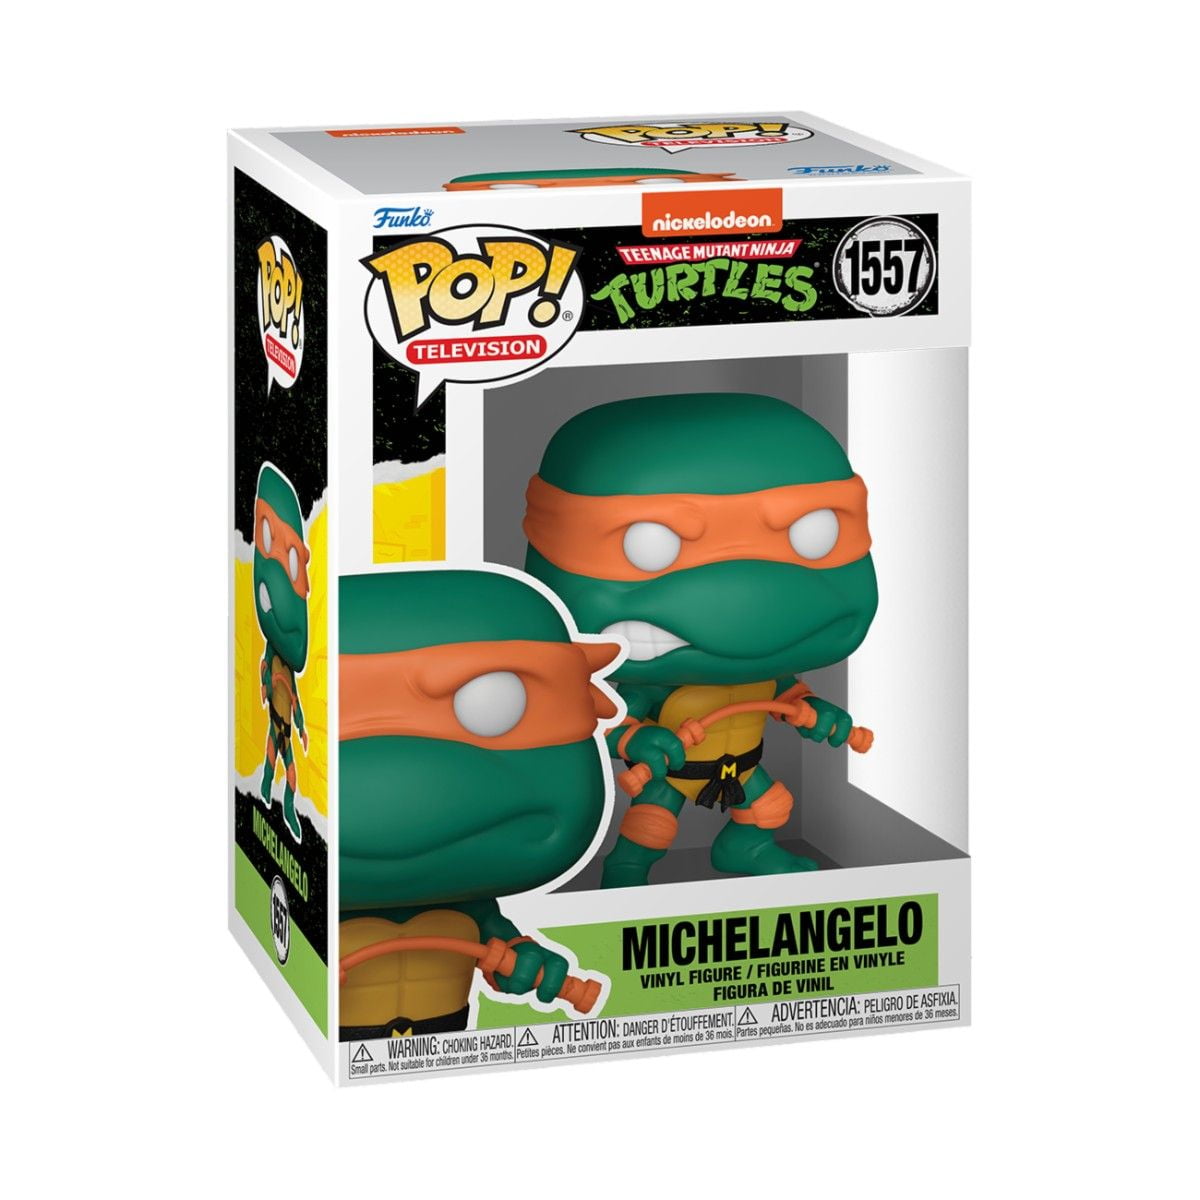 Michelangelo - Teenage Mutant Ninja Turtles S4 - Funko POP! TV (1557)